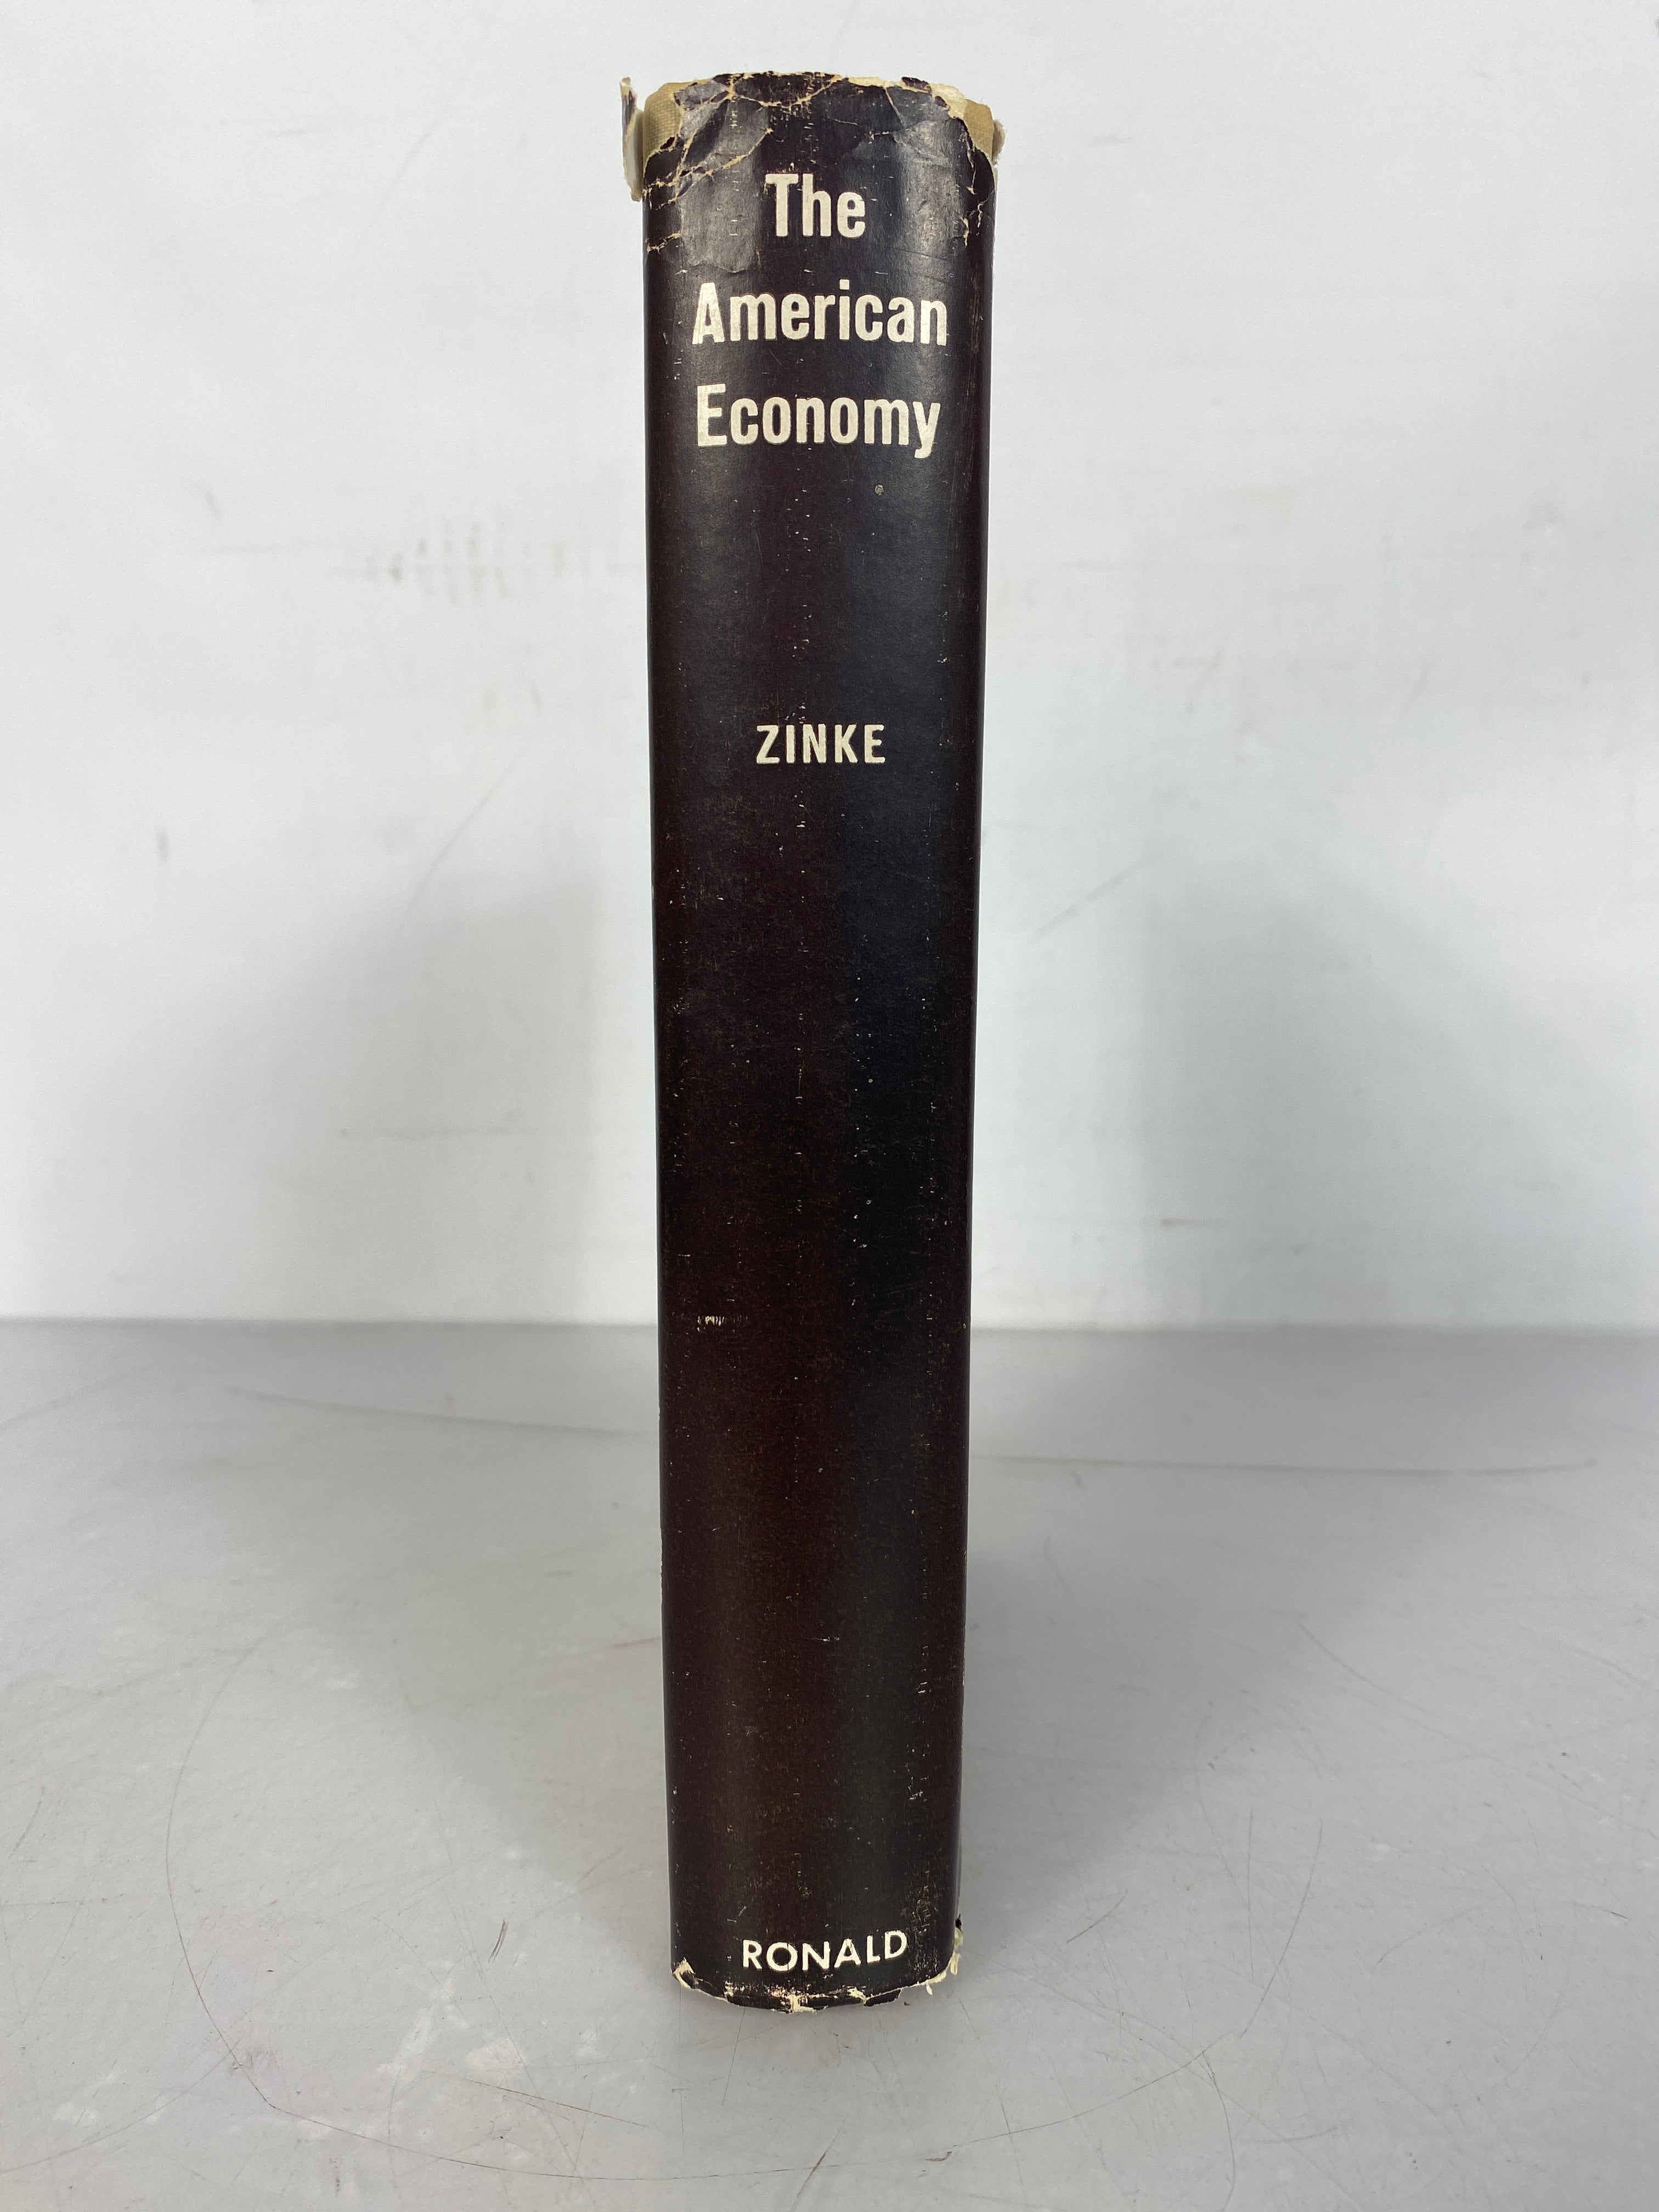 The American Economy by George Zinke 1959 HC DJ